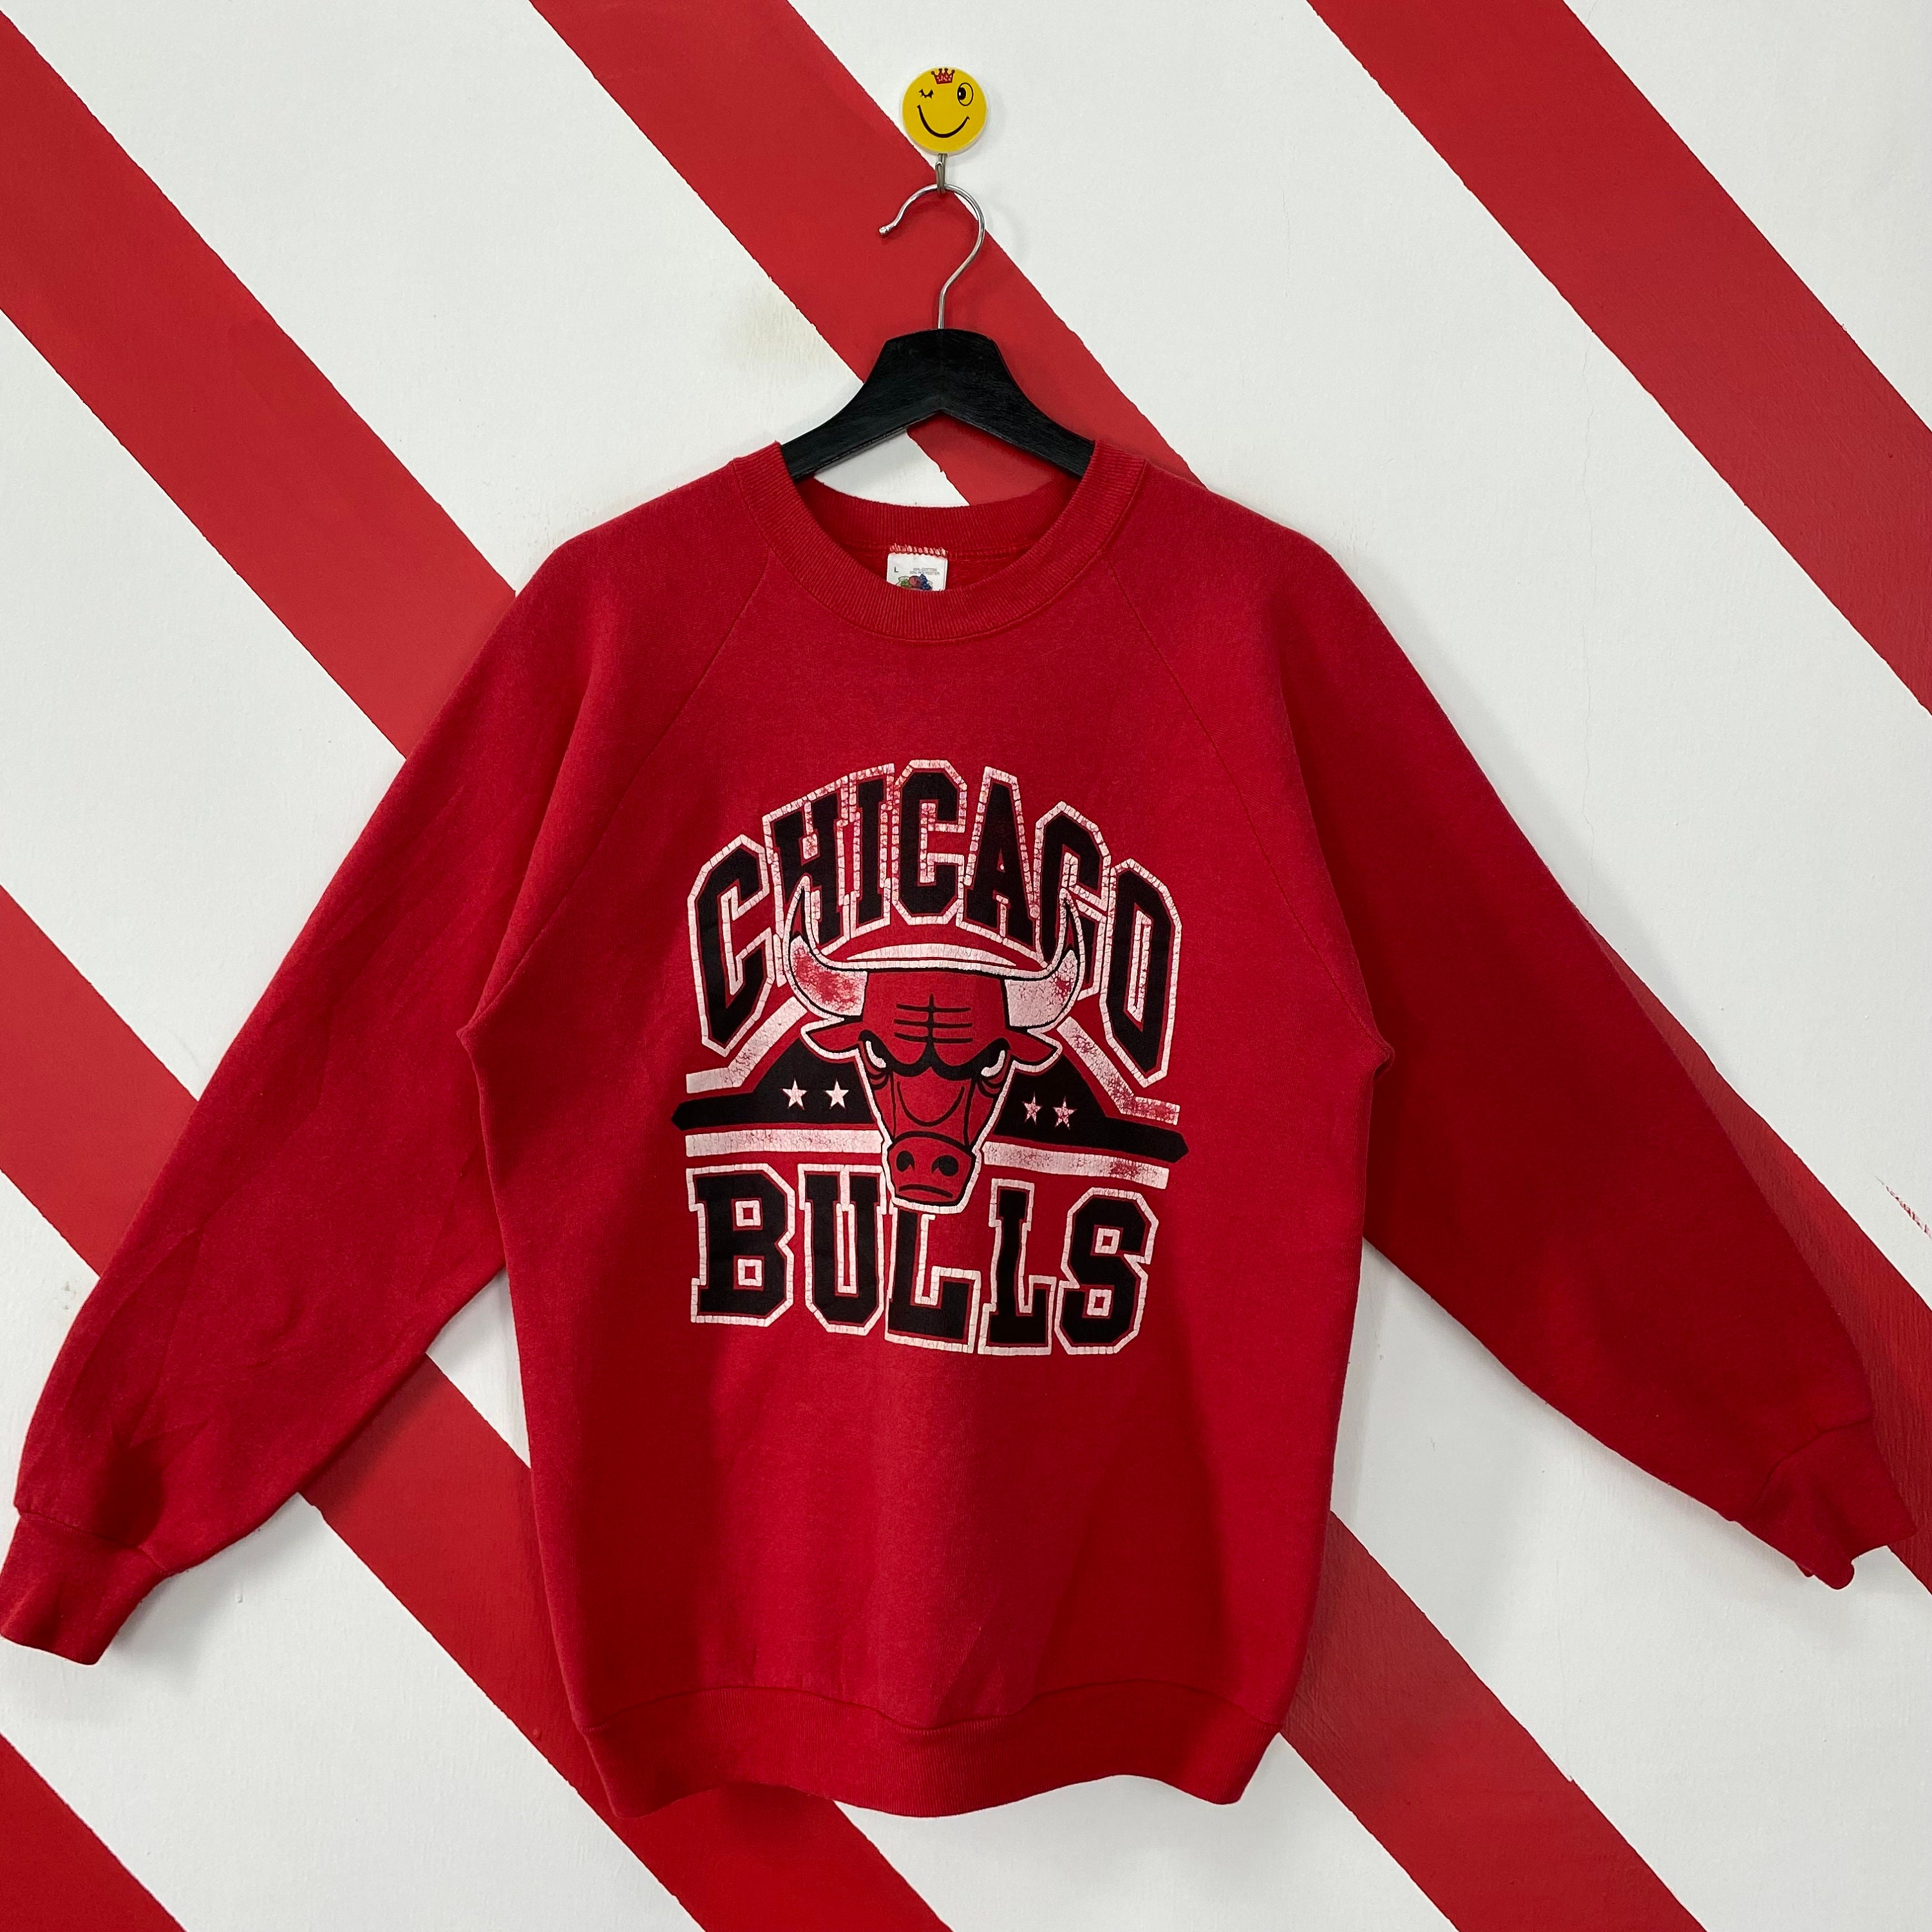 Vintage Chicago Bulls Sweatshirt Crewneck Size XL Red 90s NBA